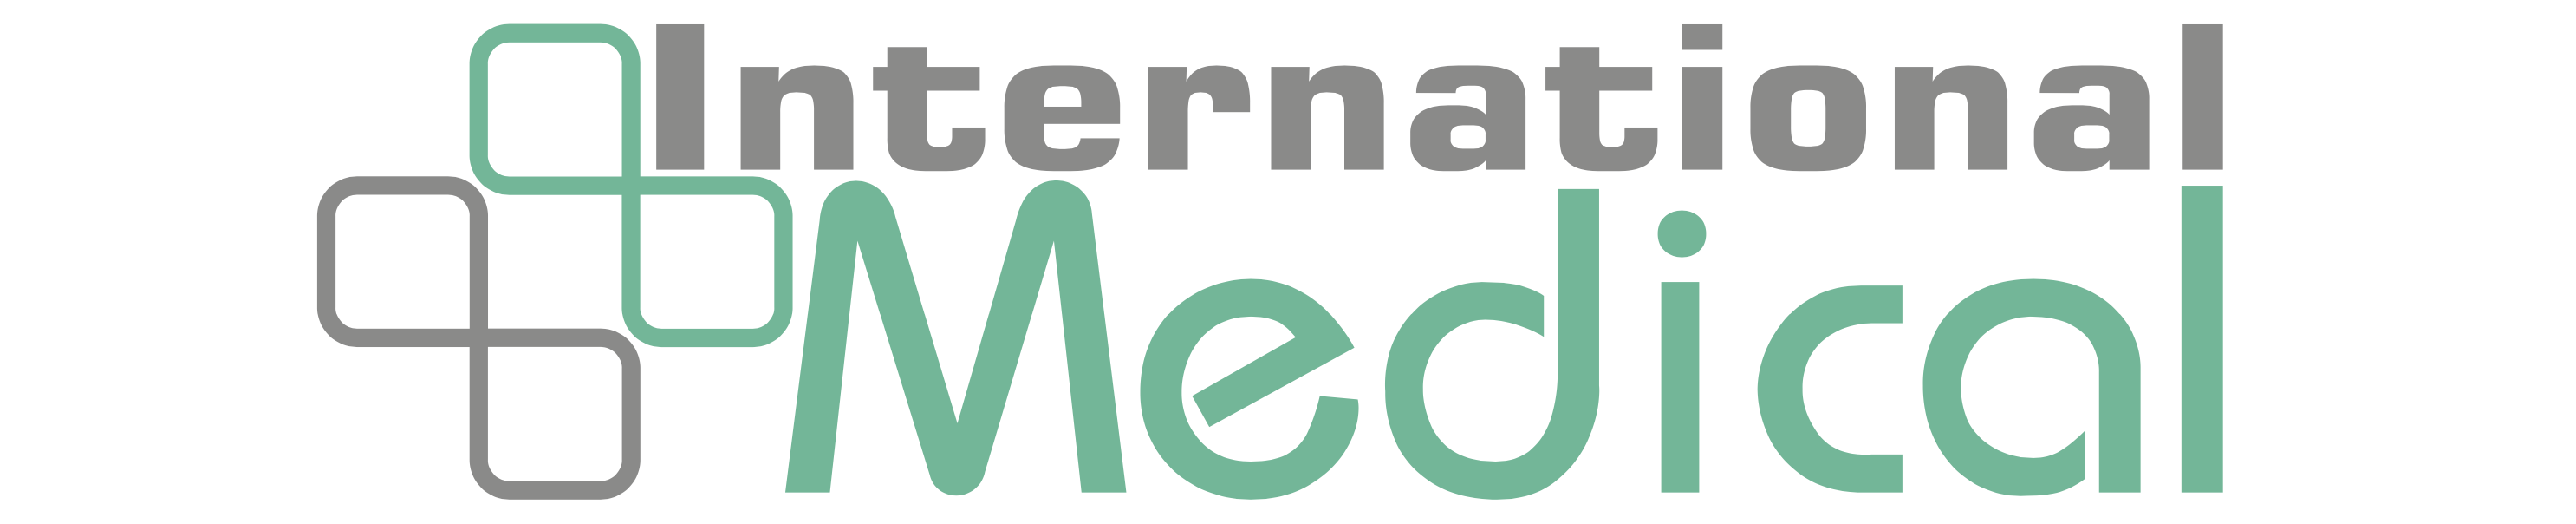 International Medical Logo